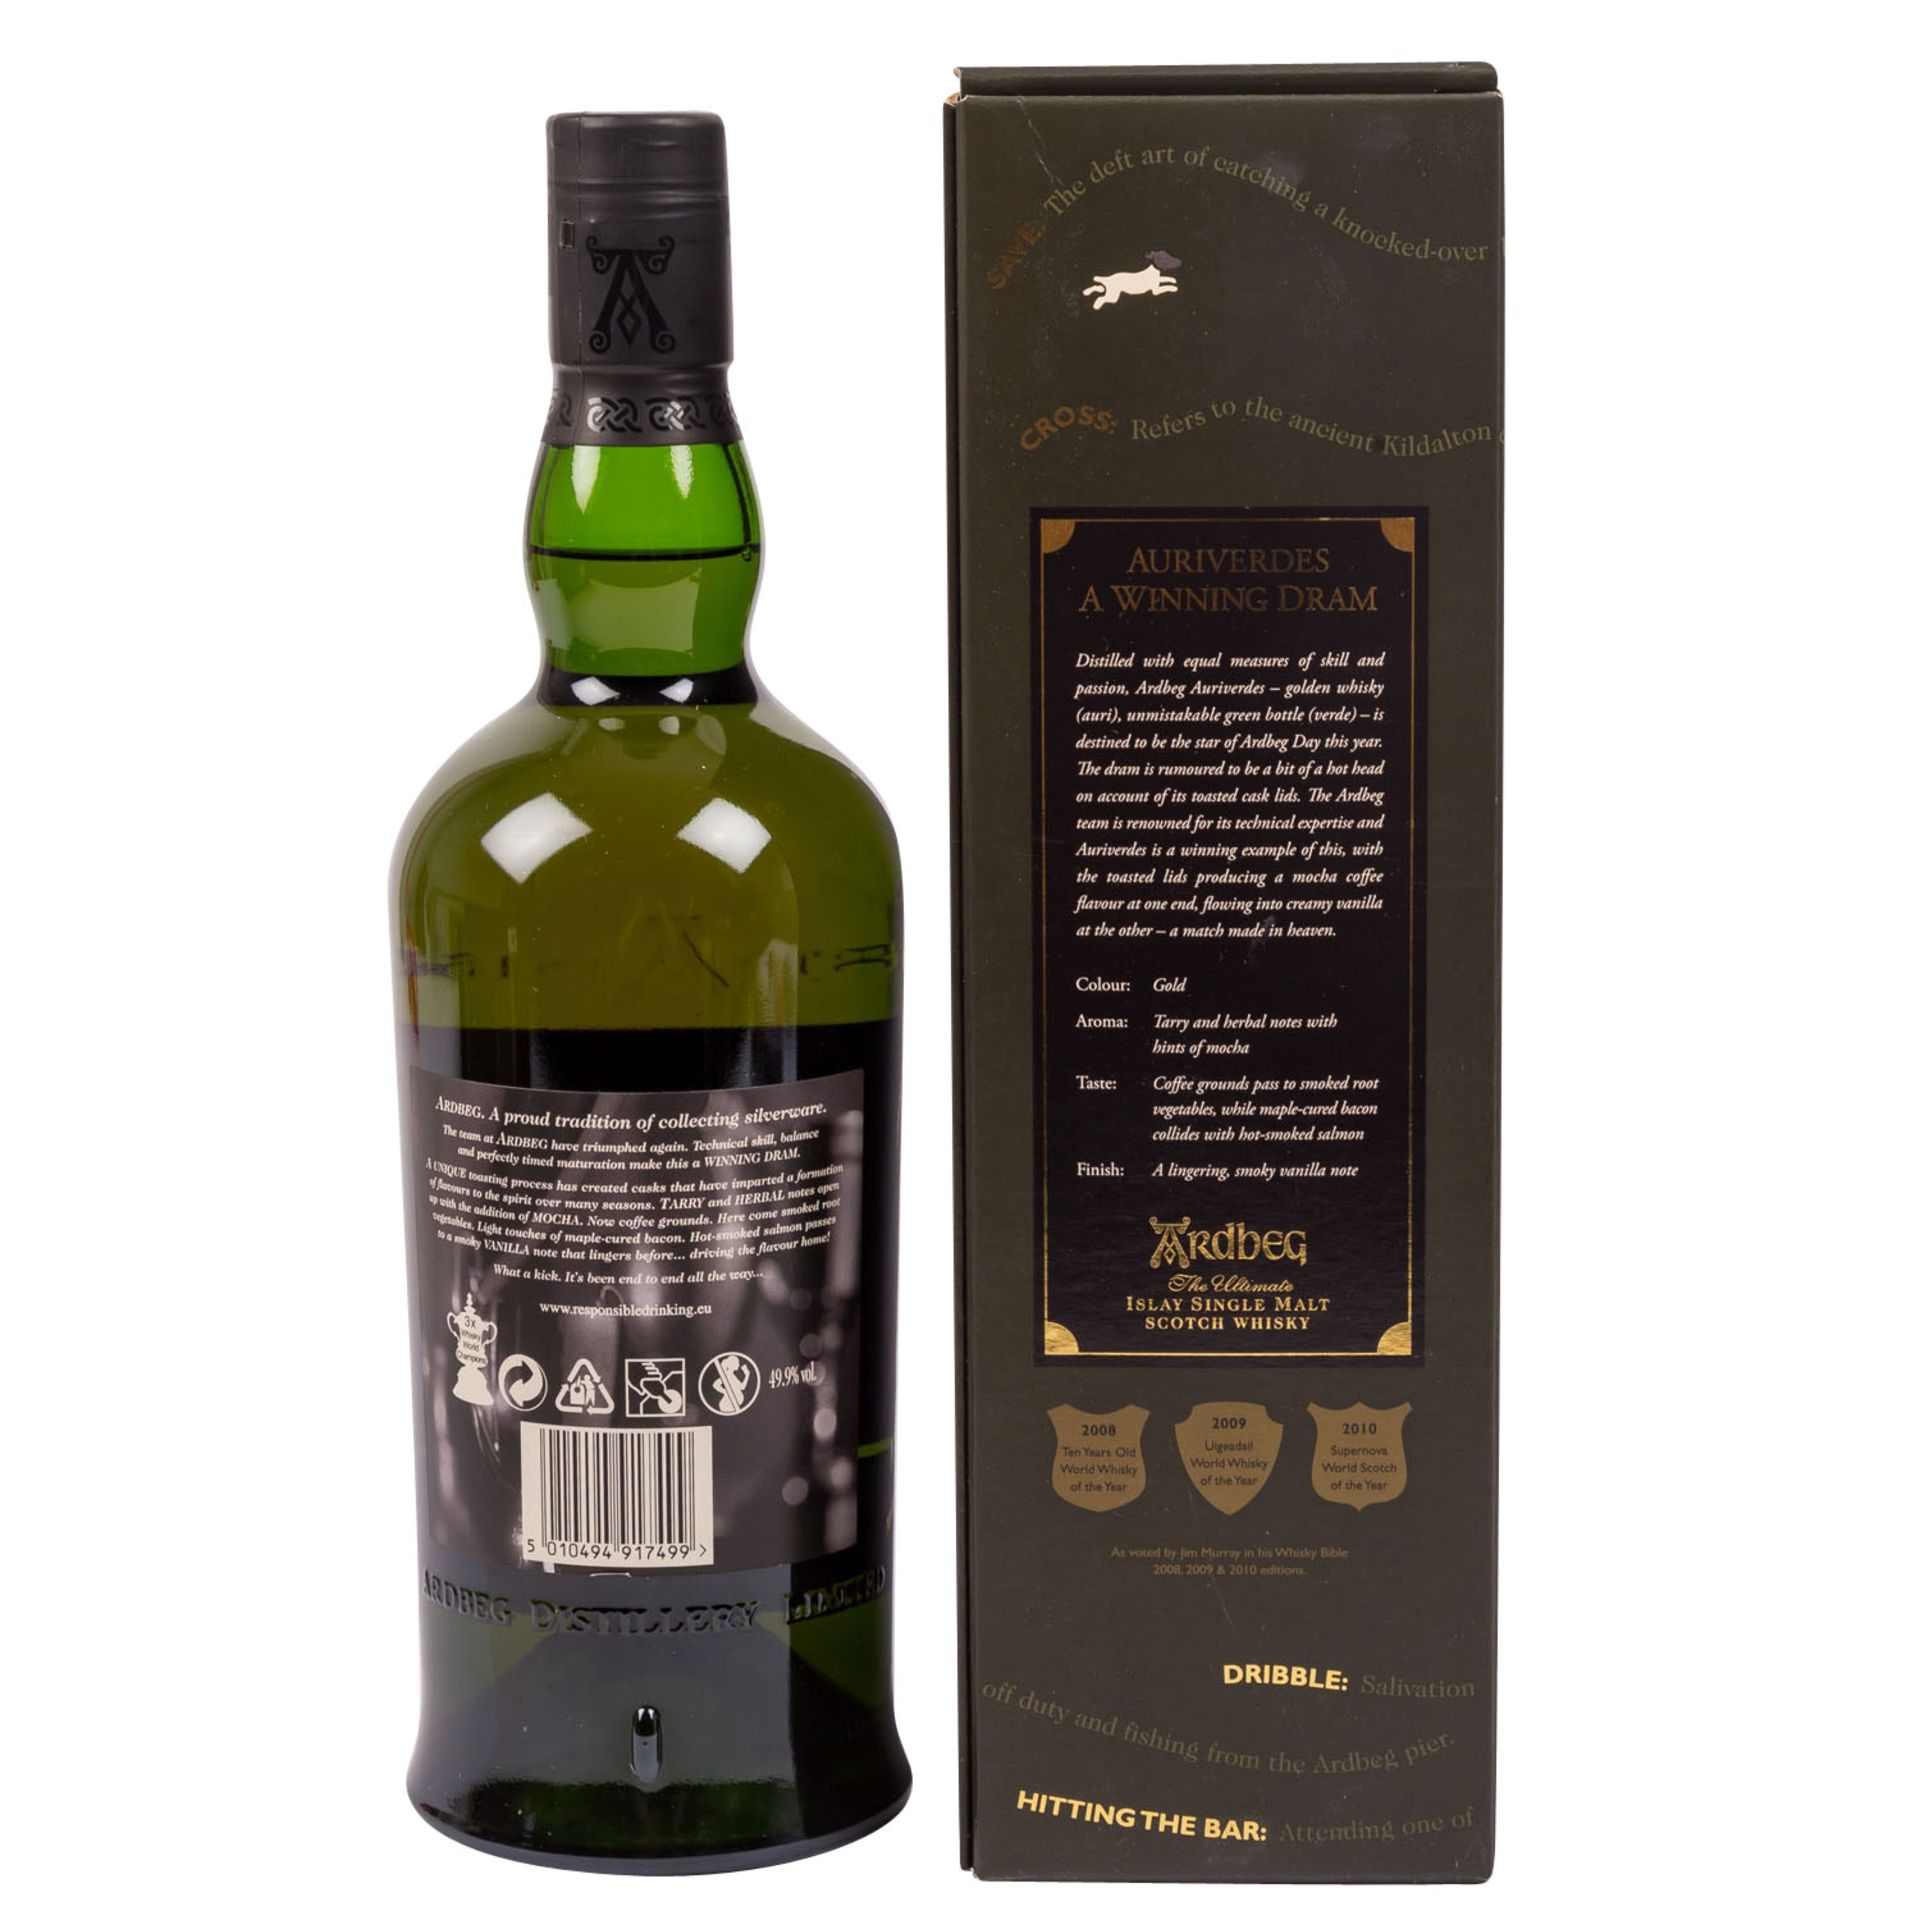 ARDBEG Single Malt Scotch Whisky 'AURI VERDES' - Image 2 of 3